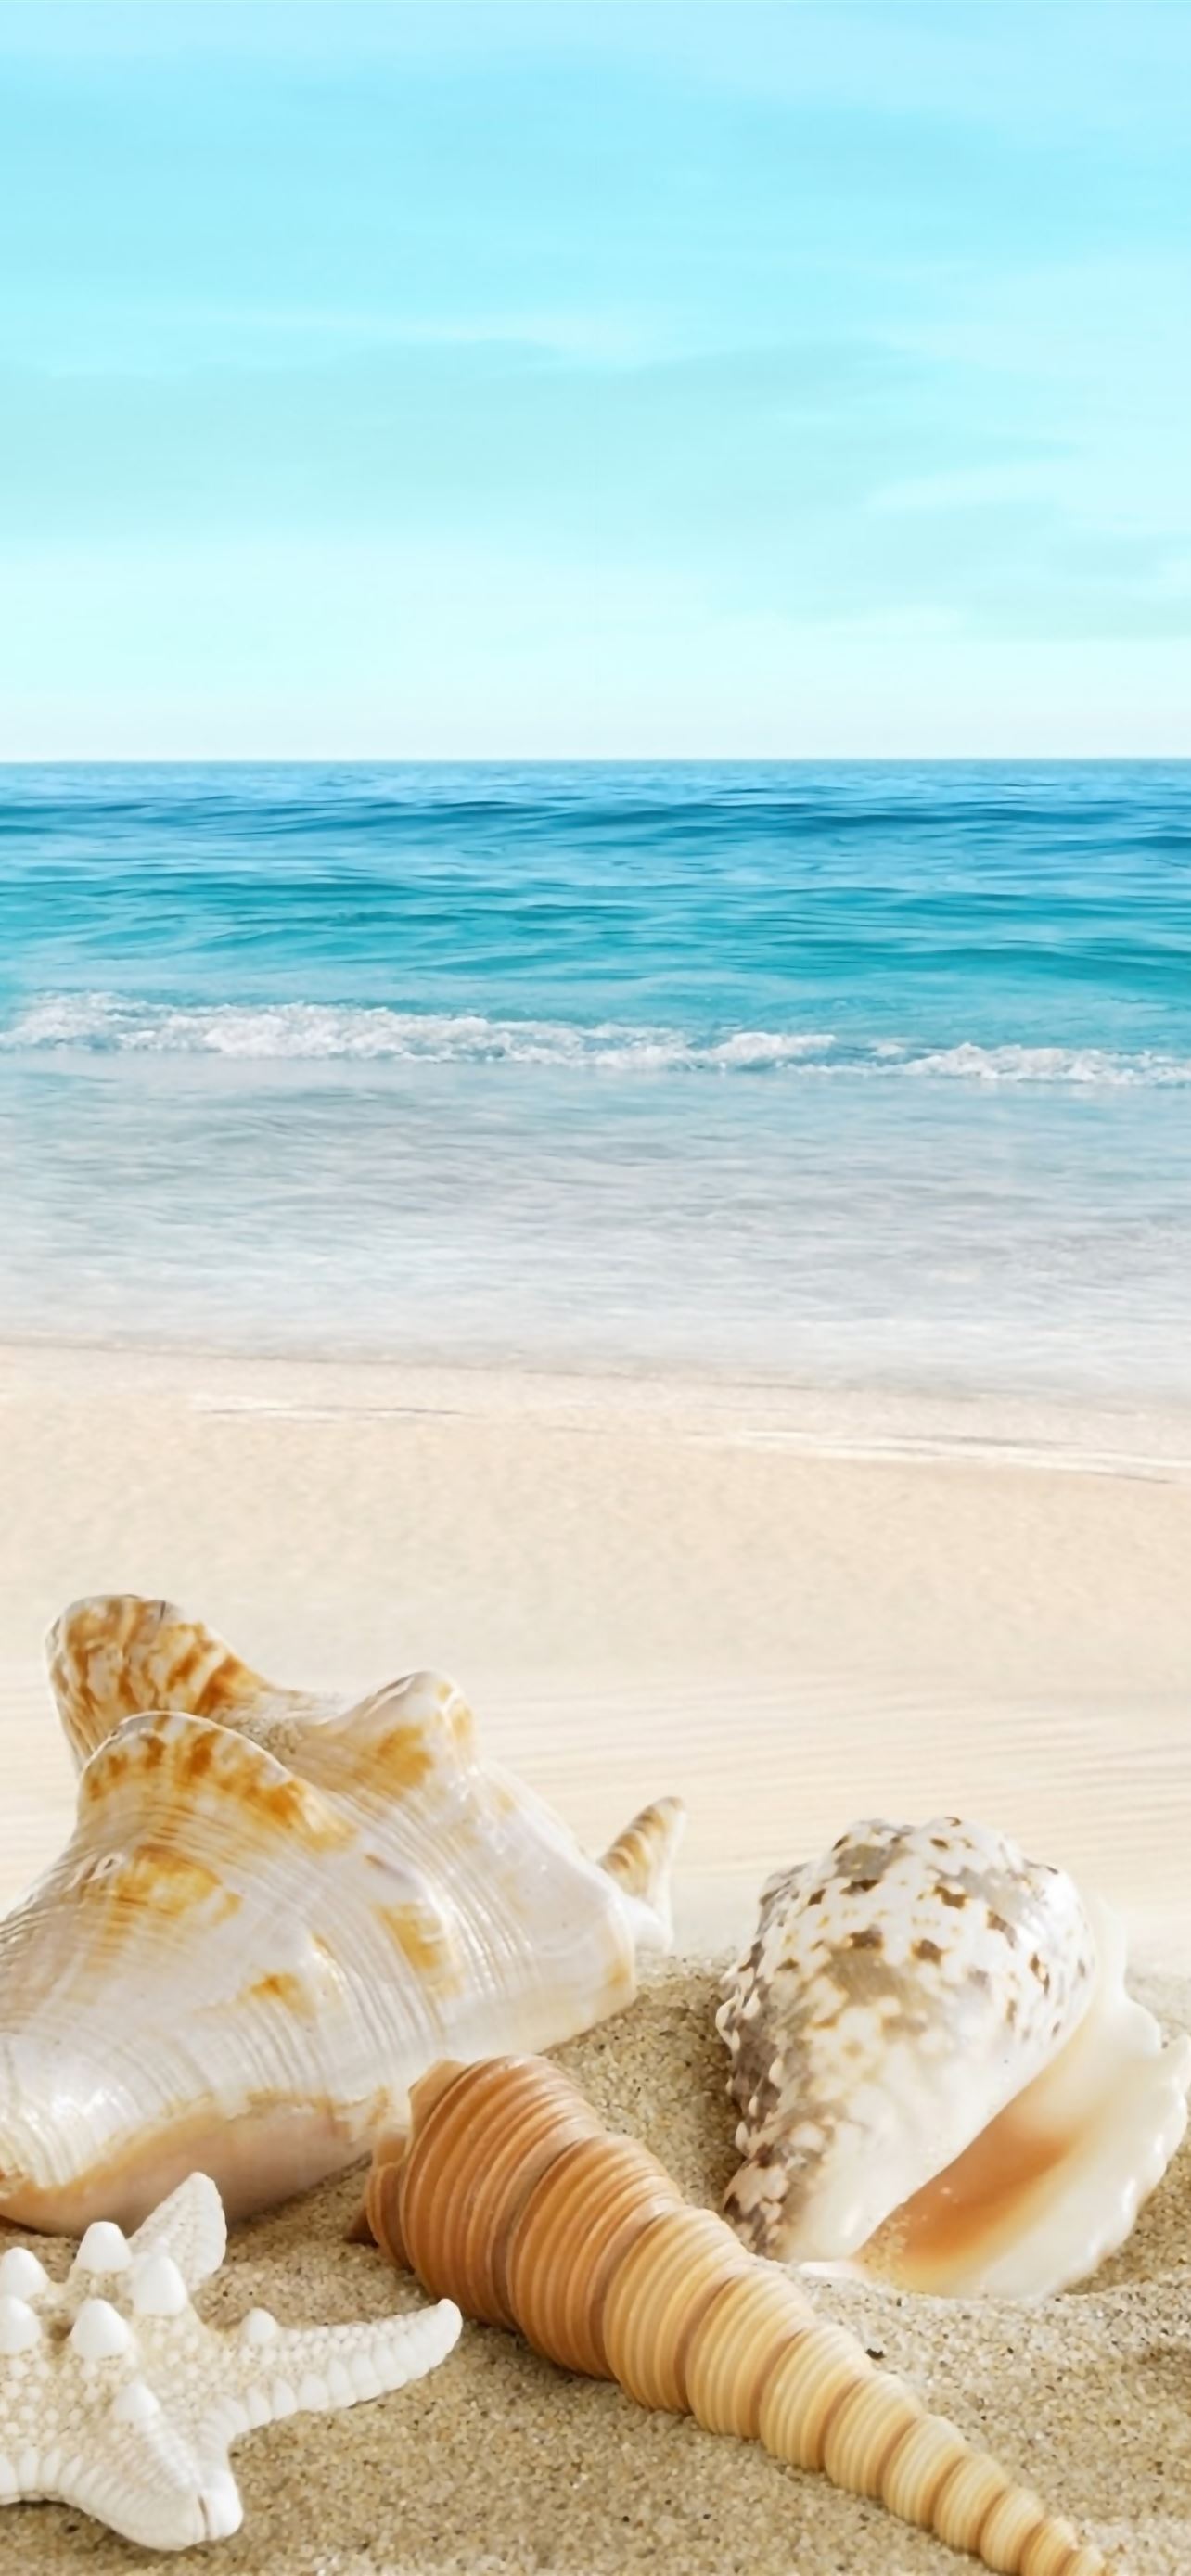 Wallpaper beach sea sand seashells images for desktop section природа   download